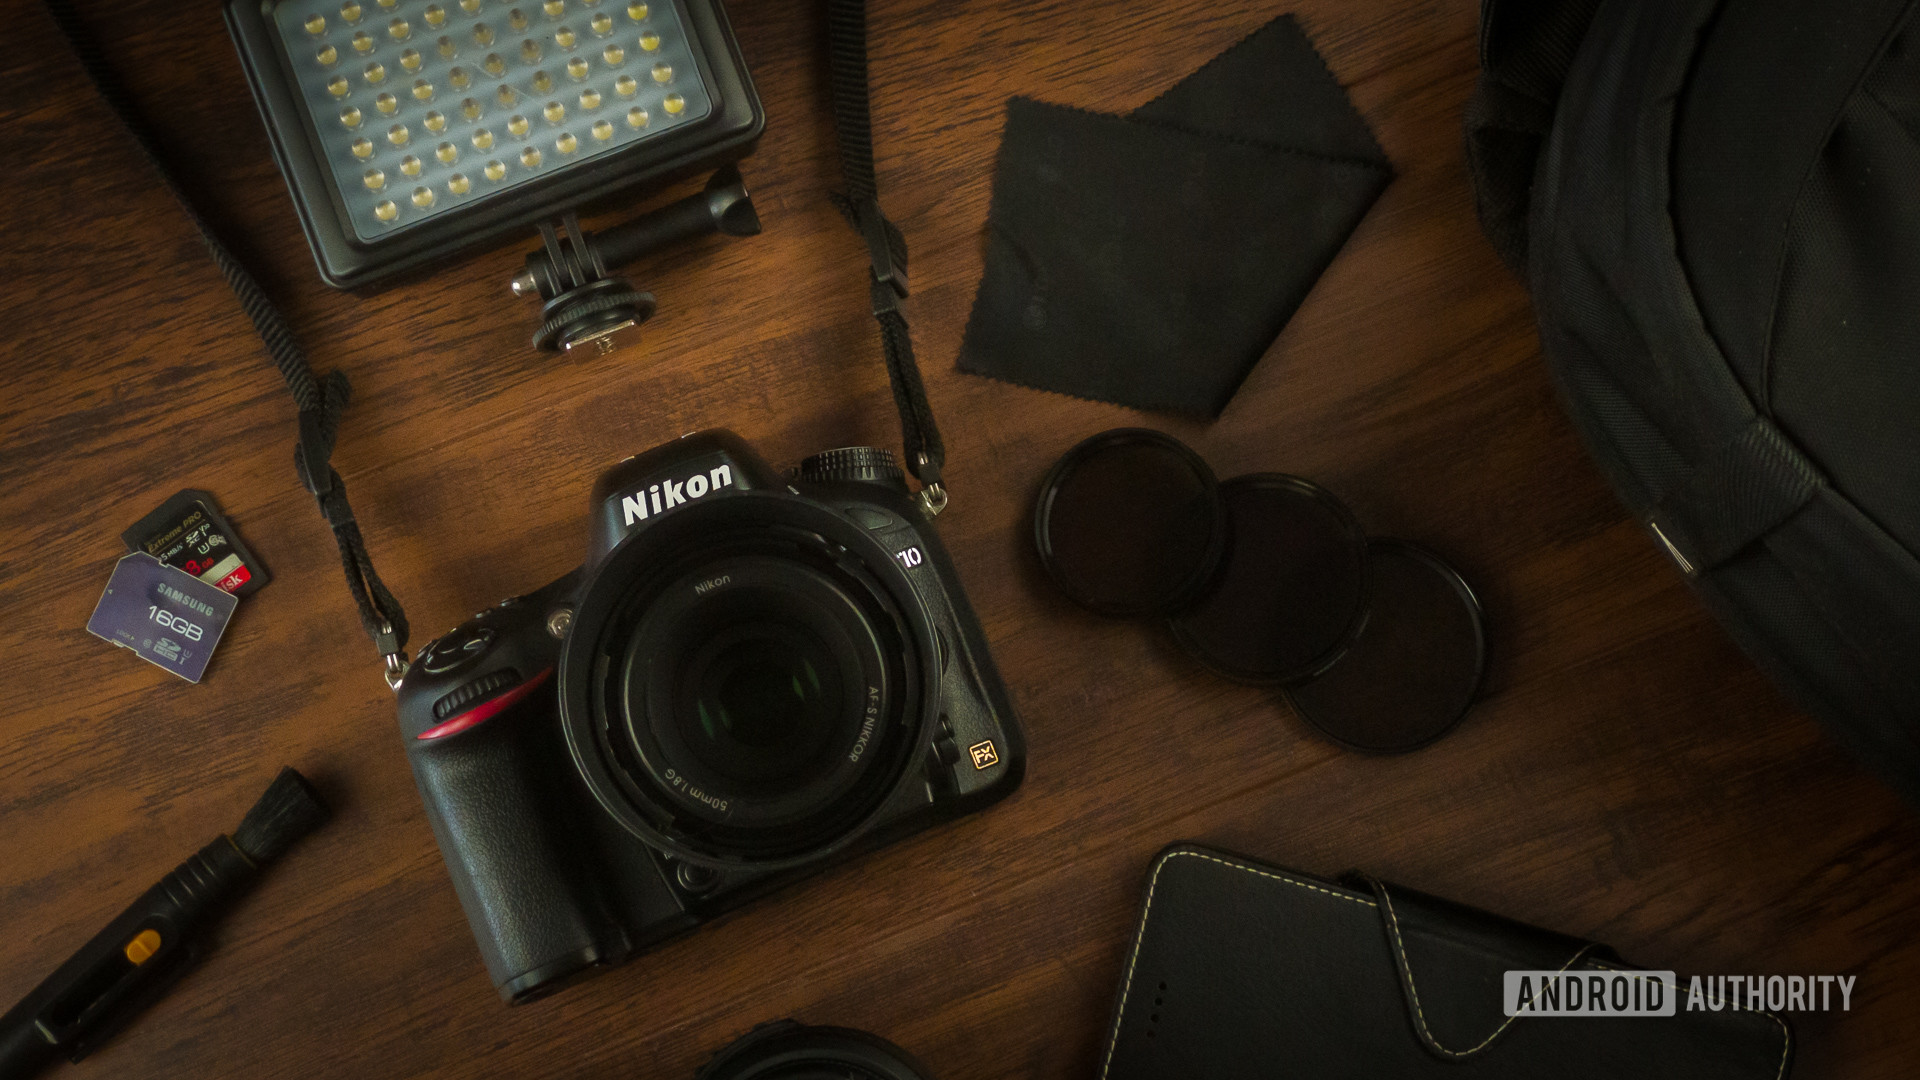 Nikon photography gear on the best cheap camera deals list